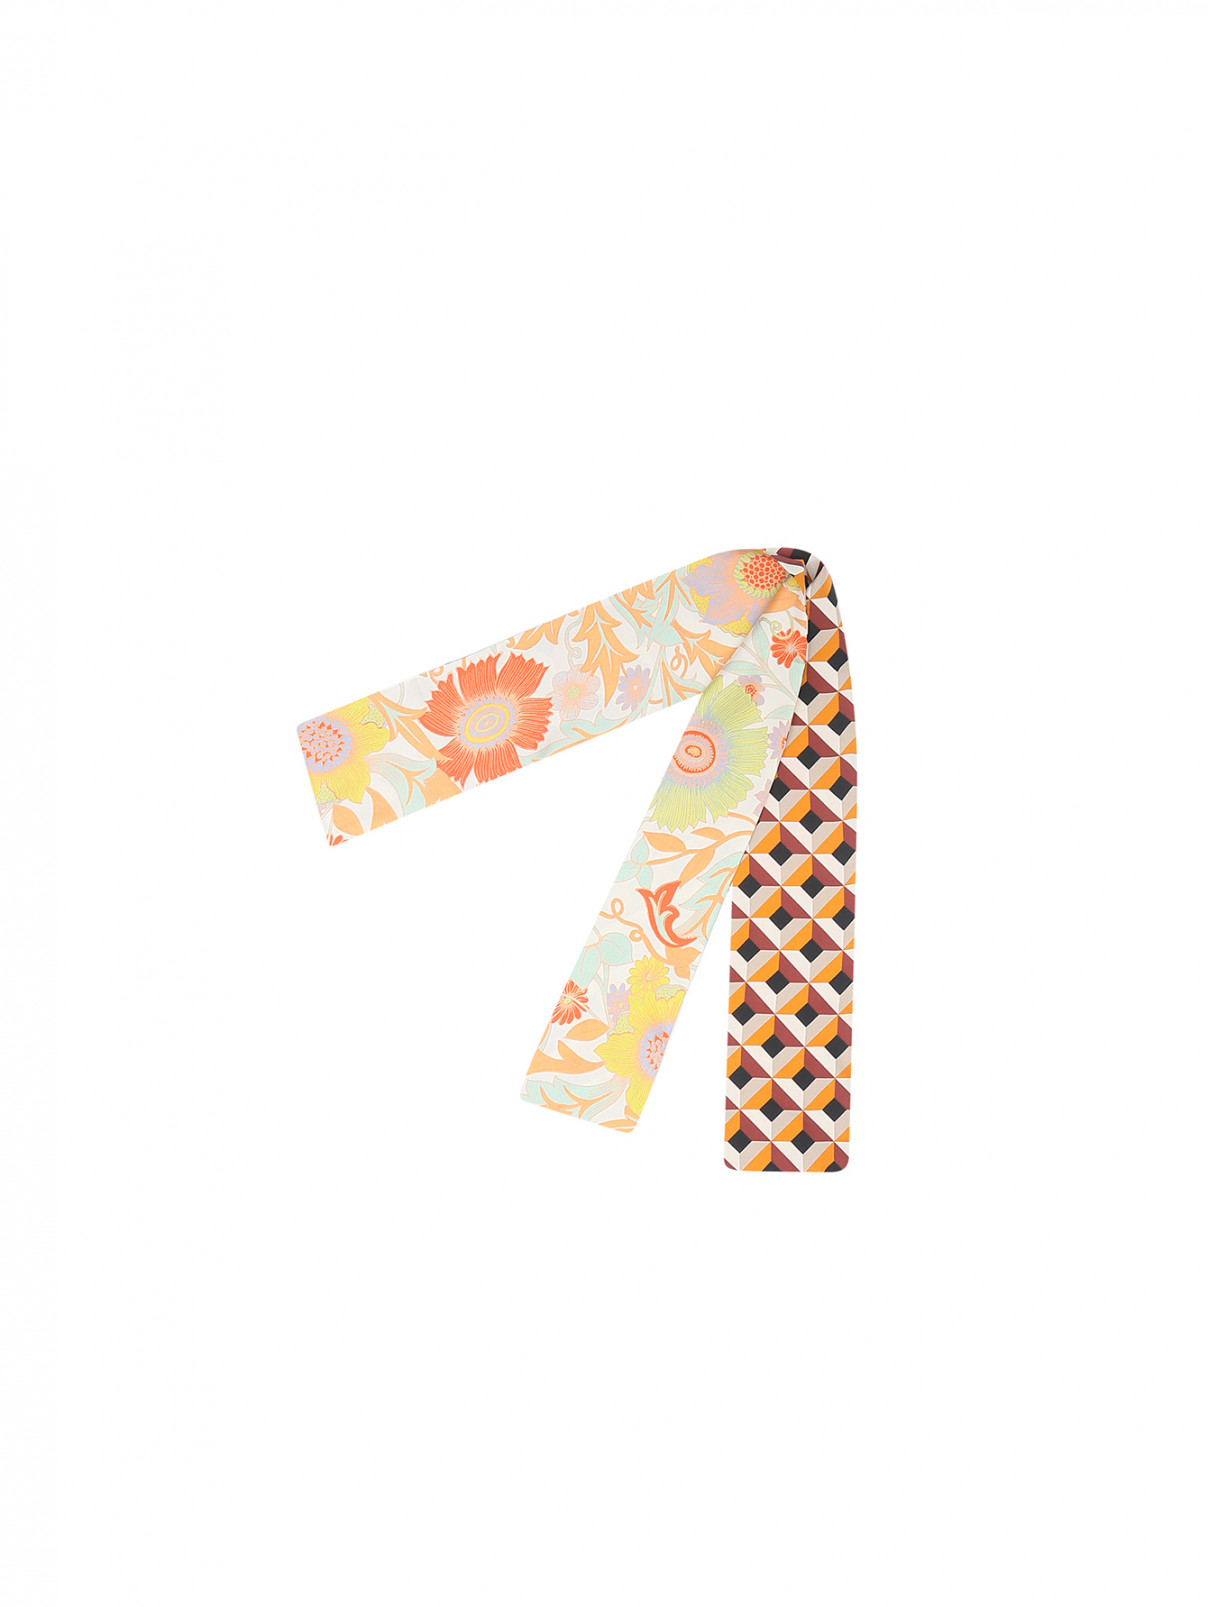 Двусторонний шарф из шелка Max Mara  –  Общий вид  – Цвет:  Мультиколор